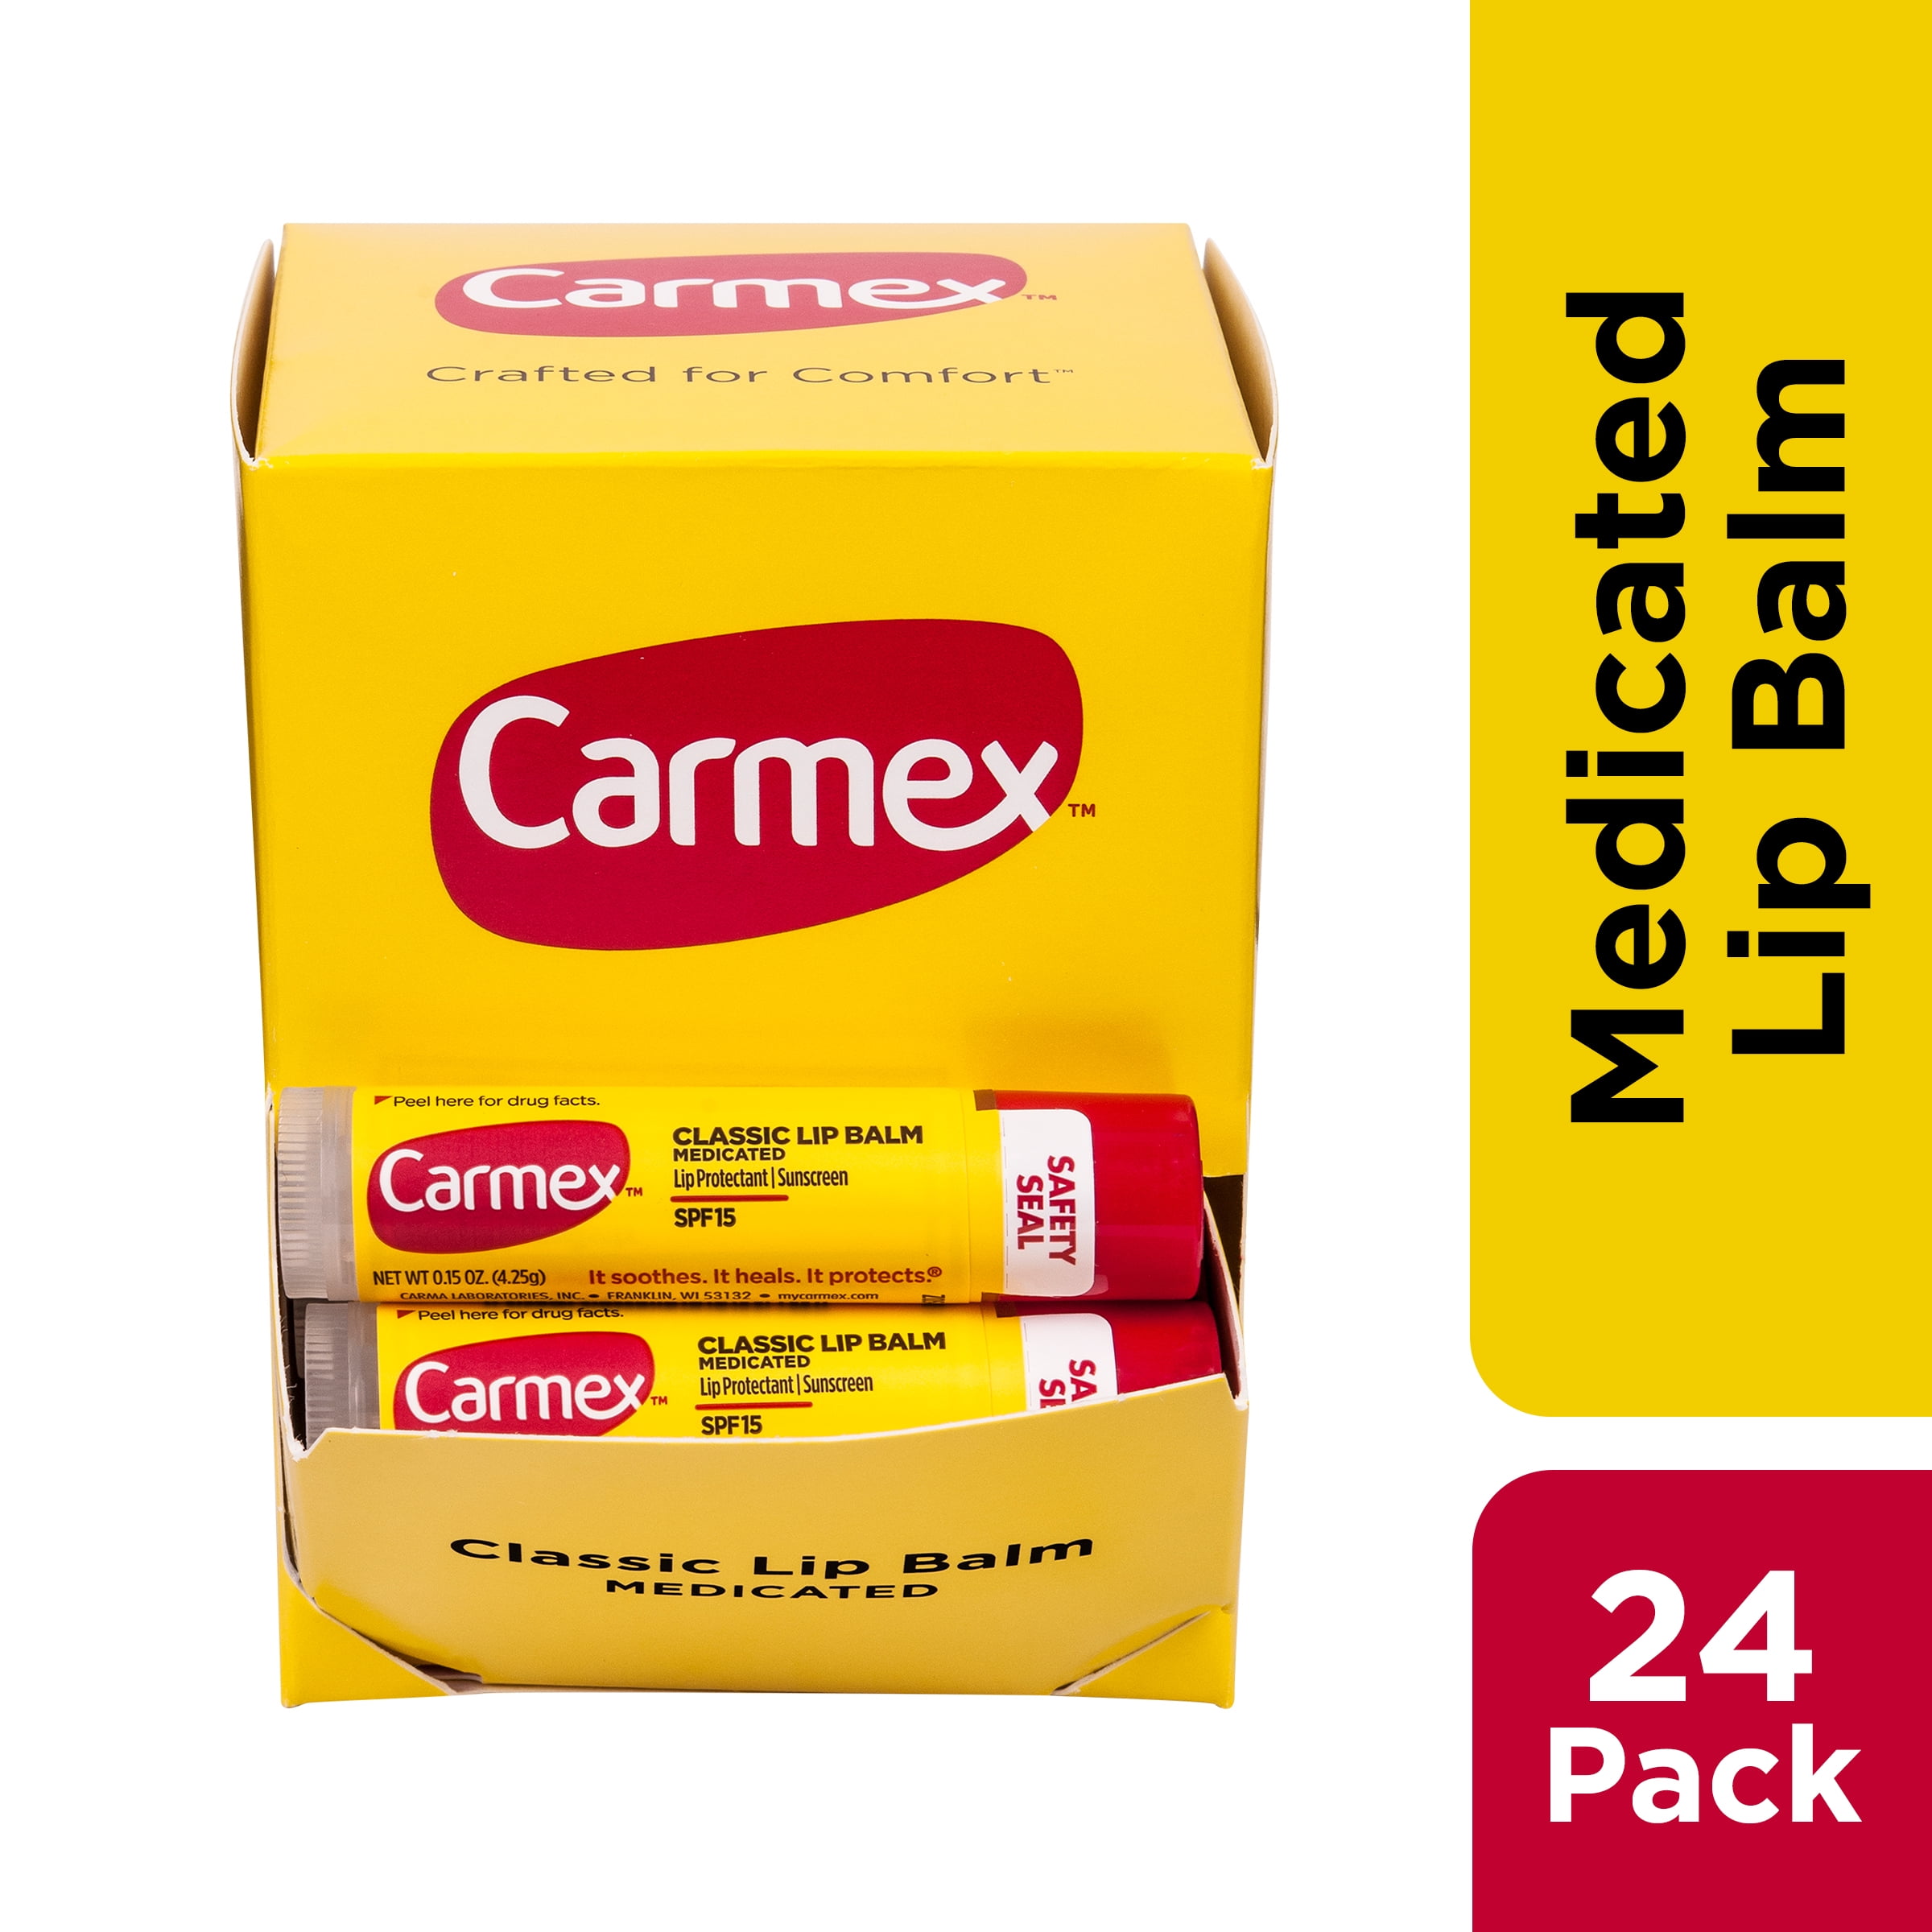 Carmex Moisturizing Medicated Lip Balms with Camphor, White 3 Pack Walmart.com